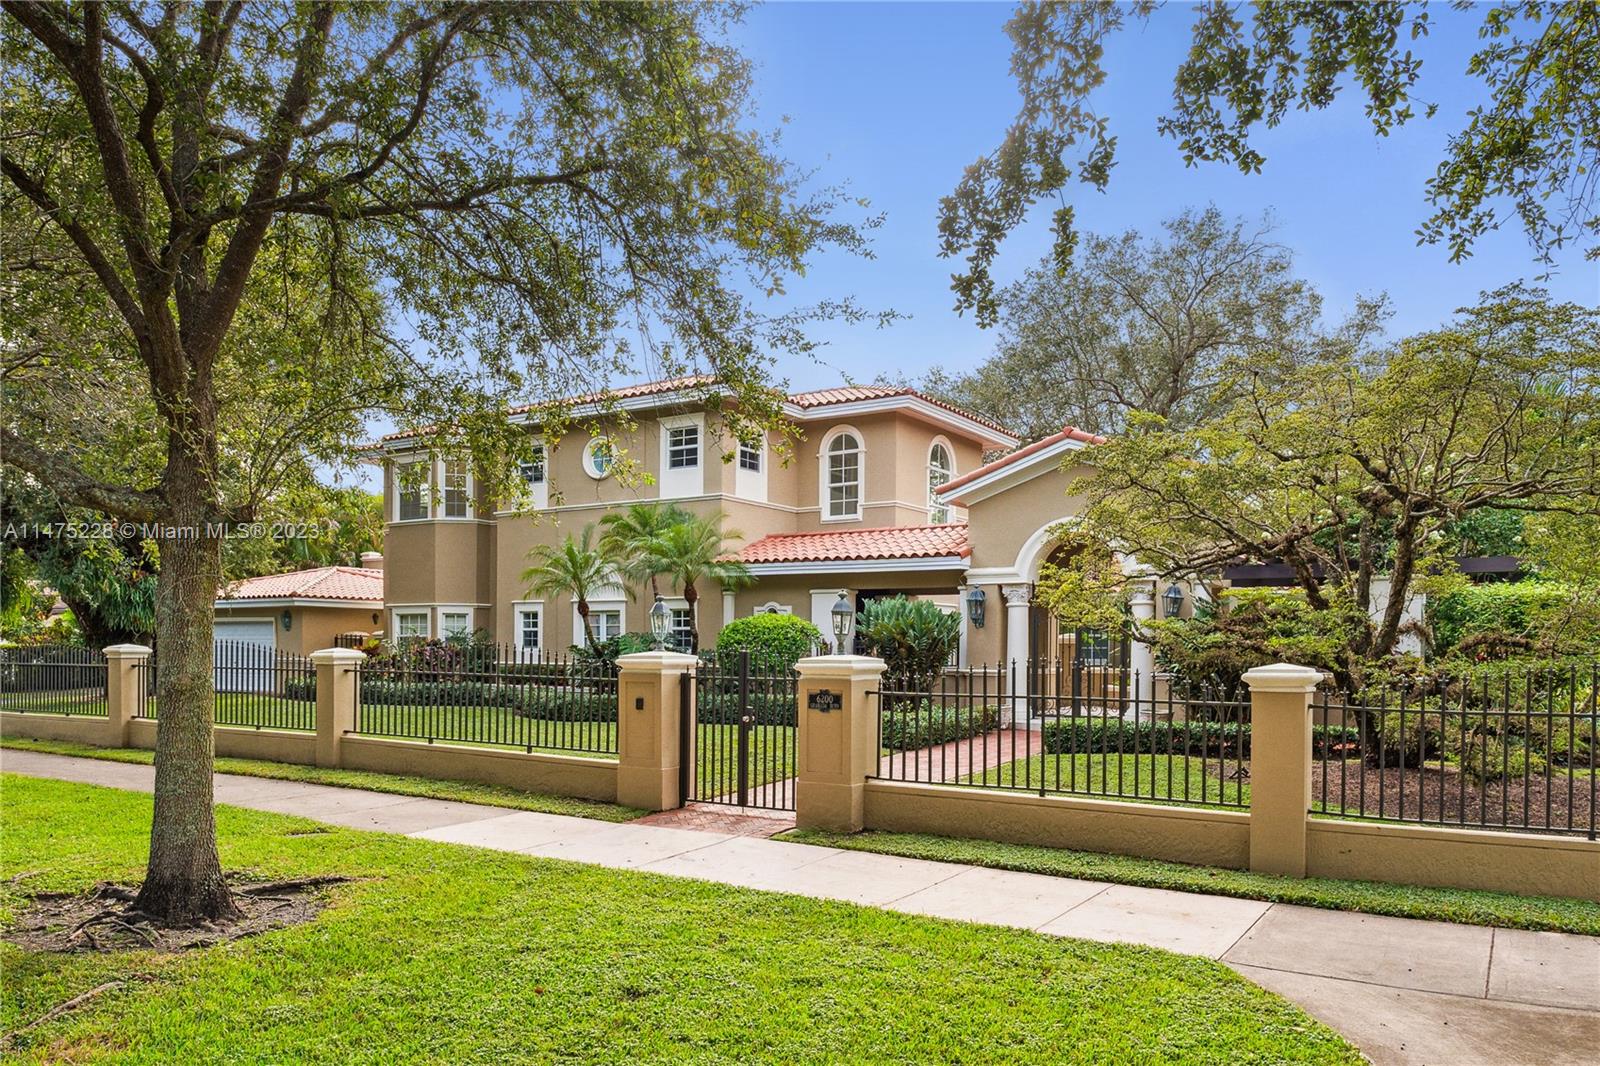 Rental Property at 6200 Granada Blvd, Coral Gables, Miami-Dade County, Florida - Bedrooms: 5 
Bathrooms: 4.5  - $20,000 MO.